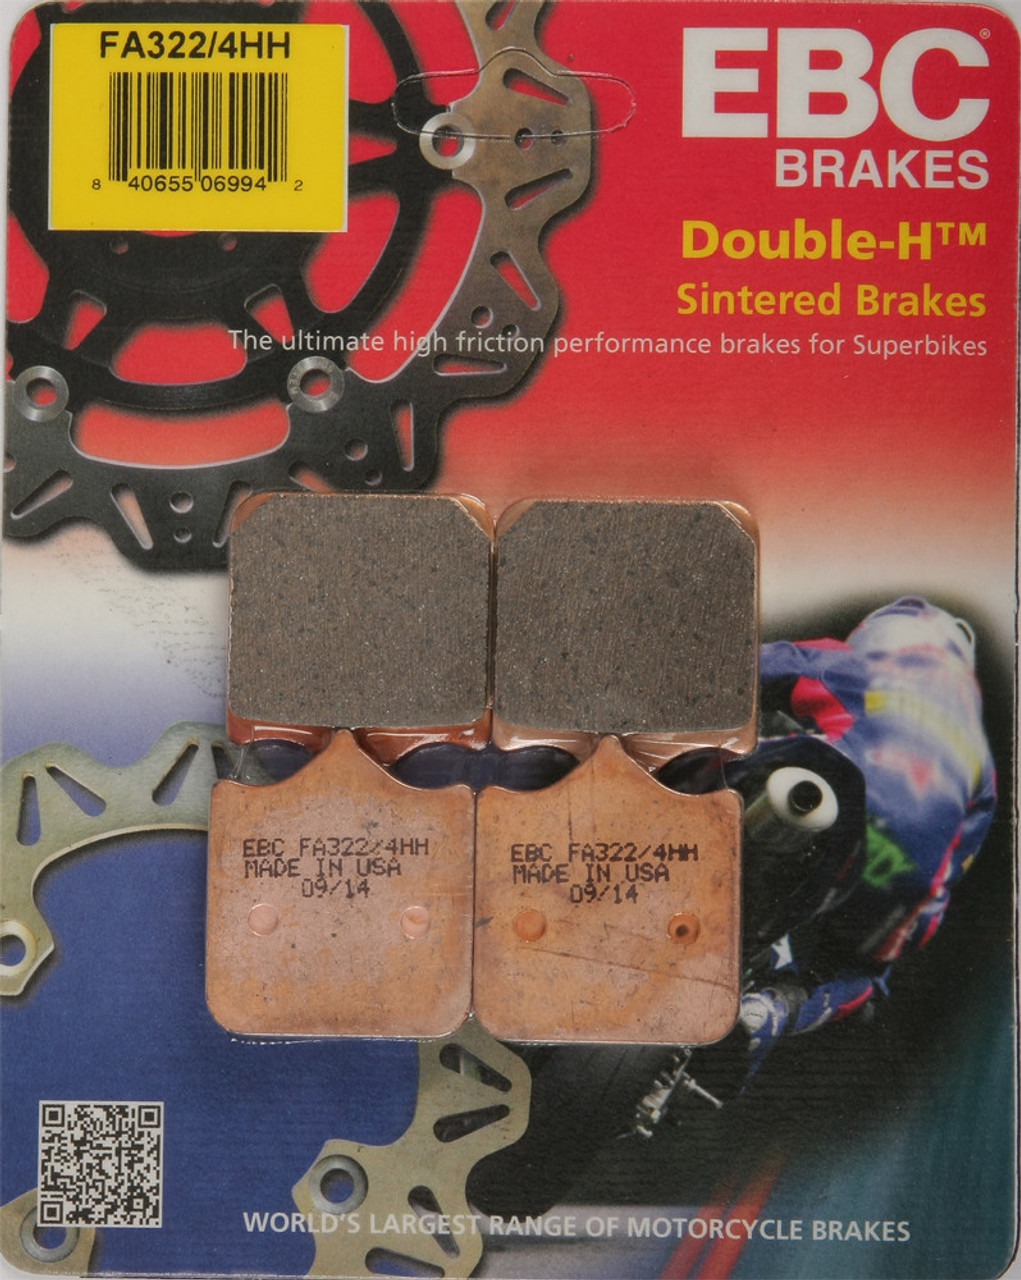 Ebc New Standard Brake Pads, 15-322/4H